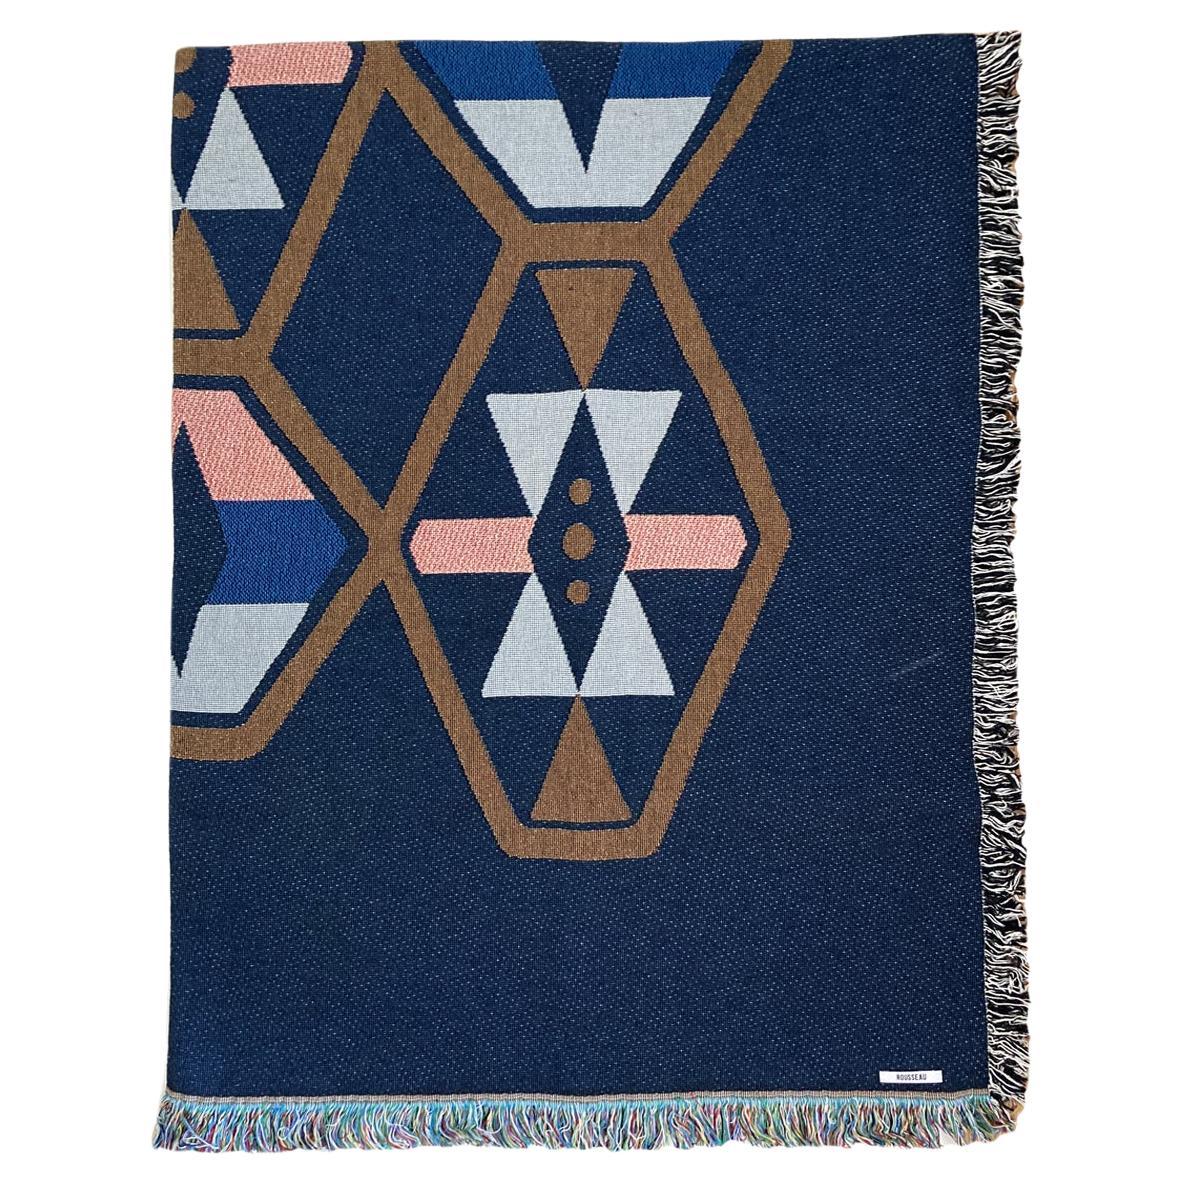 Petite Loom Woven Throw Blanket, Twilight Navy Geo, 40 x 54 For Sale